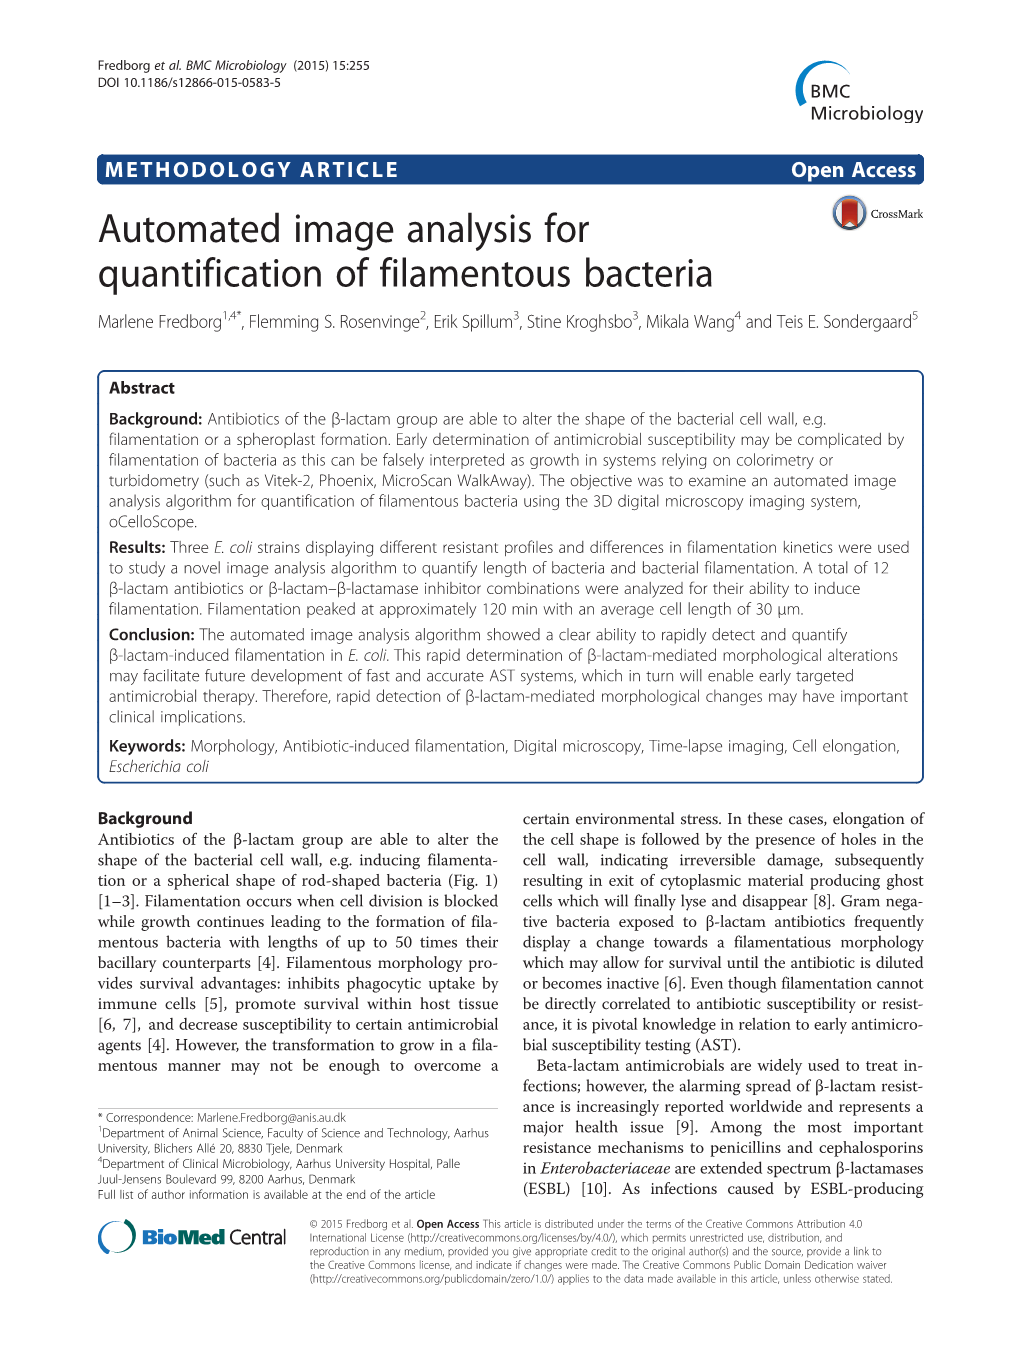 Automated Image Analysis for Quantification of Filamentous Bacteria Marlene Fredborg1,4*, Flemming S